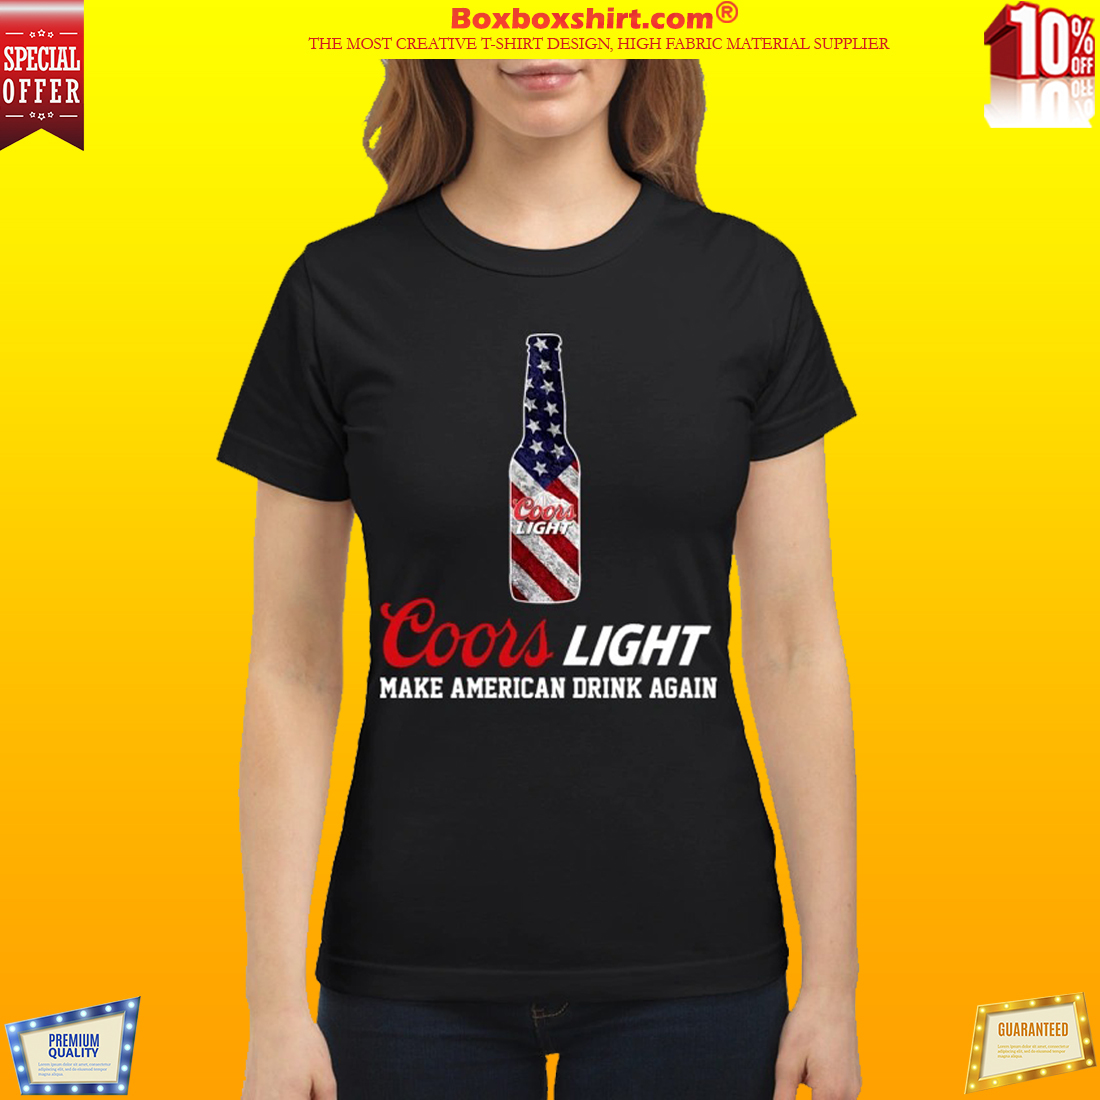 Coors light make American drink again classic shirt